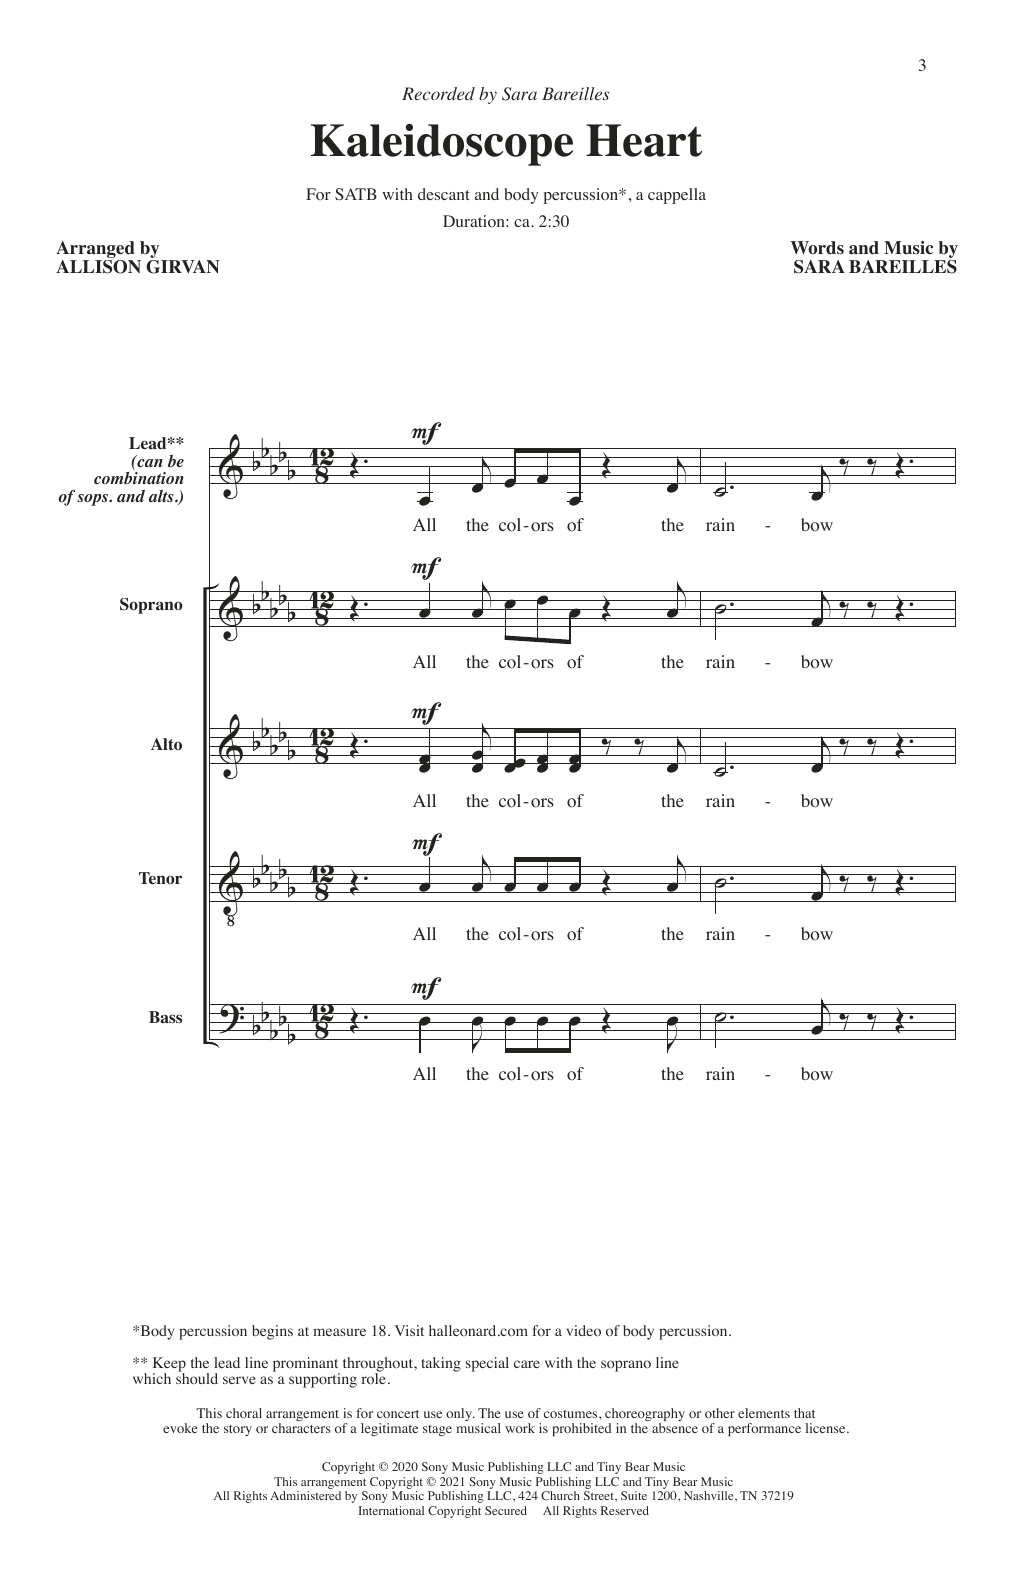 Sara Bareilles Kaleidoscope Heart (arr. Allison Girvan) Sheet Music Notes & Chords for SSA Choir - Download or Print PDF